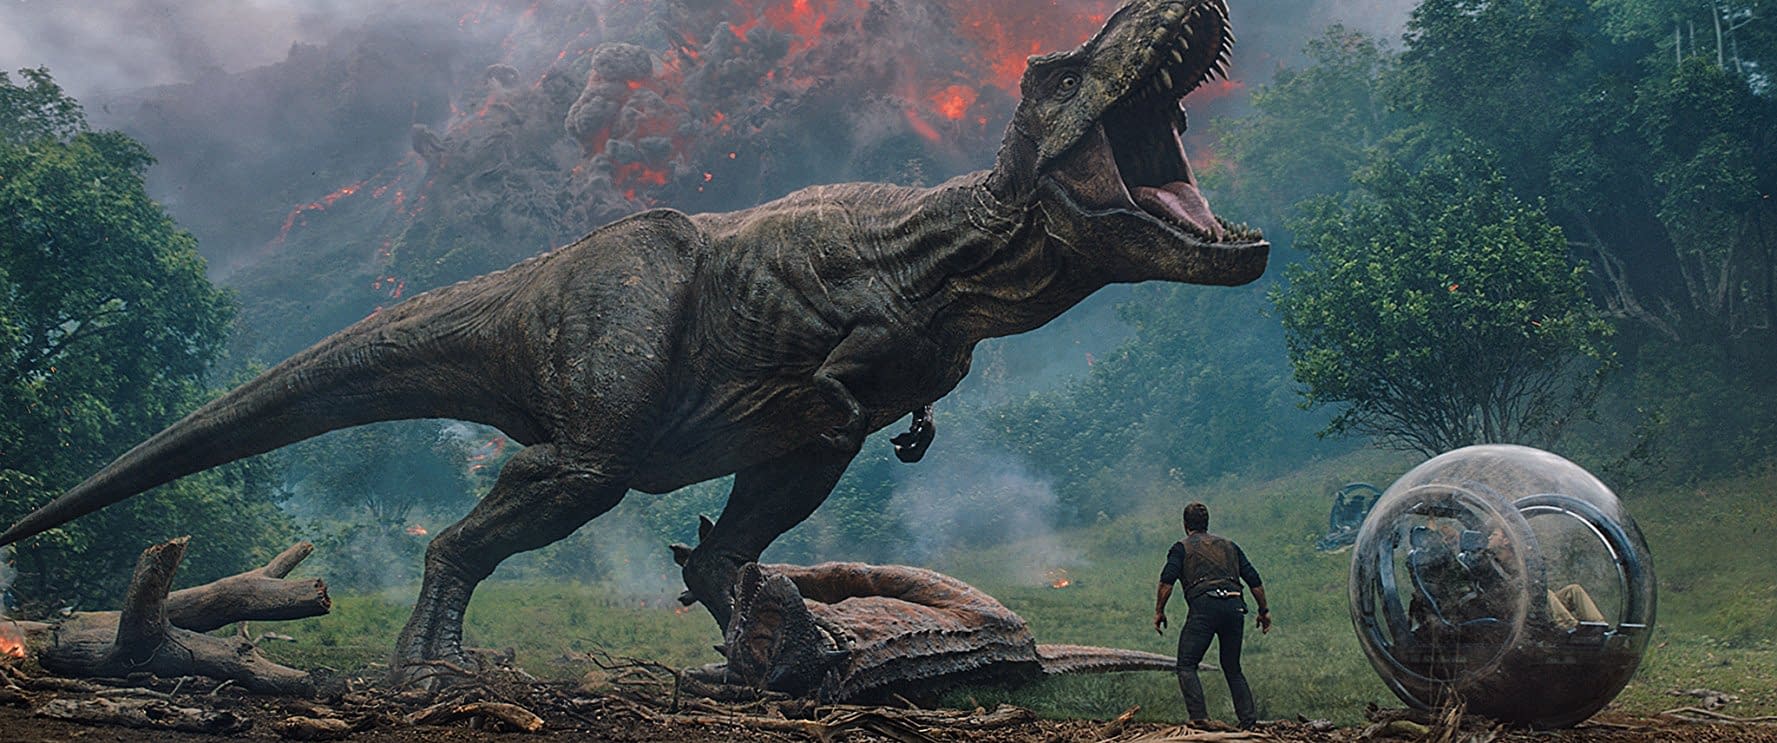 Jurassic World 3 Sets a June 2021 Release Date